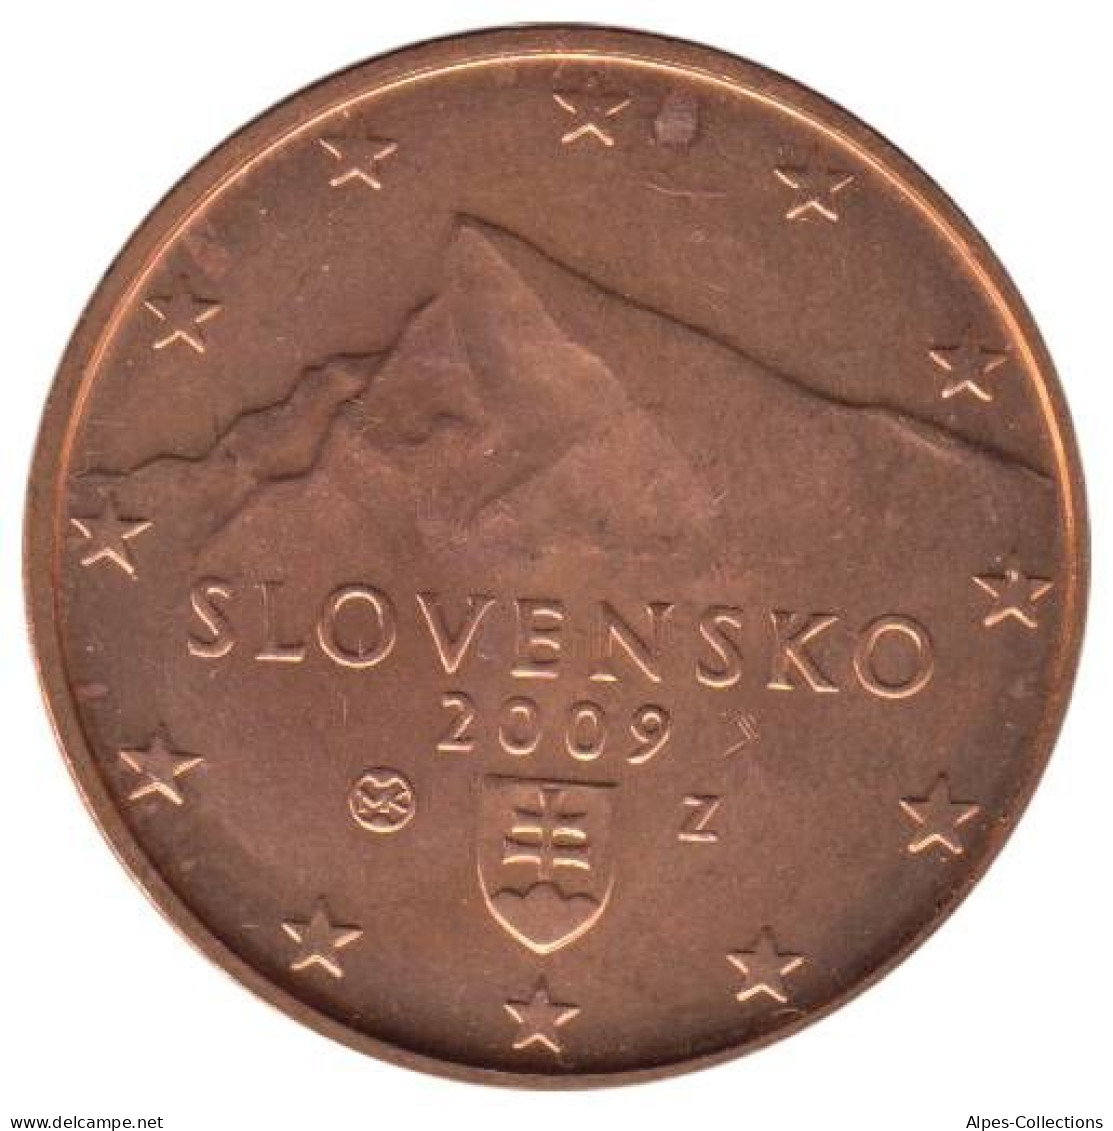 SQ00509.1 - SLOVAQUIE - 5 Cents - 2009 - Eslovaquia